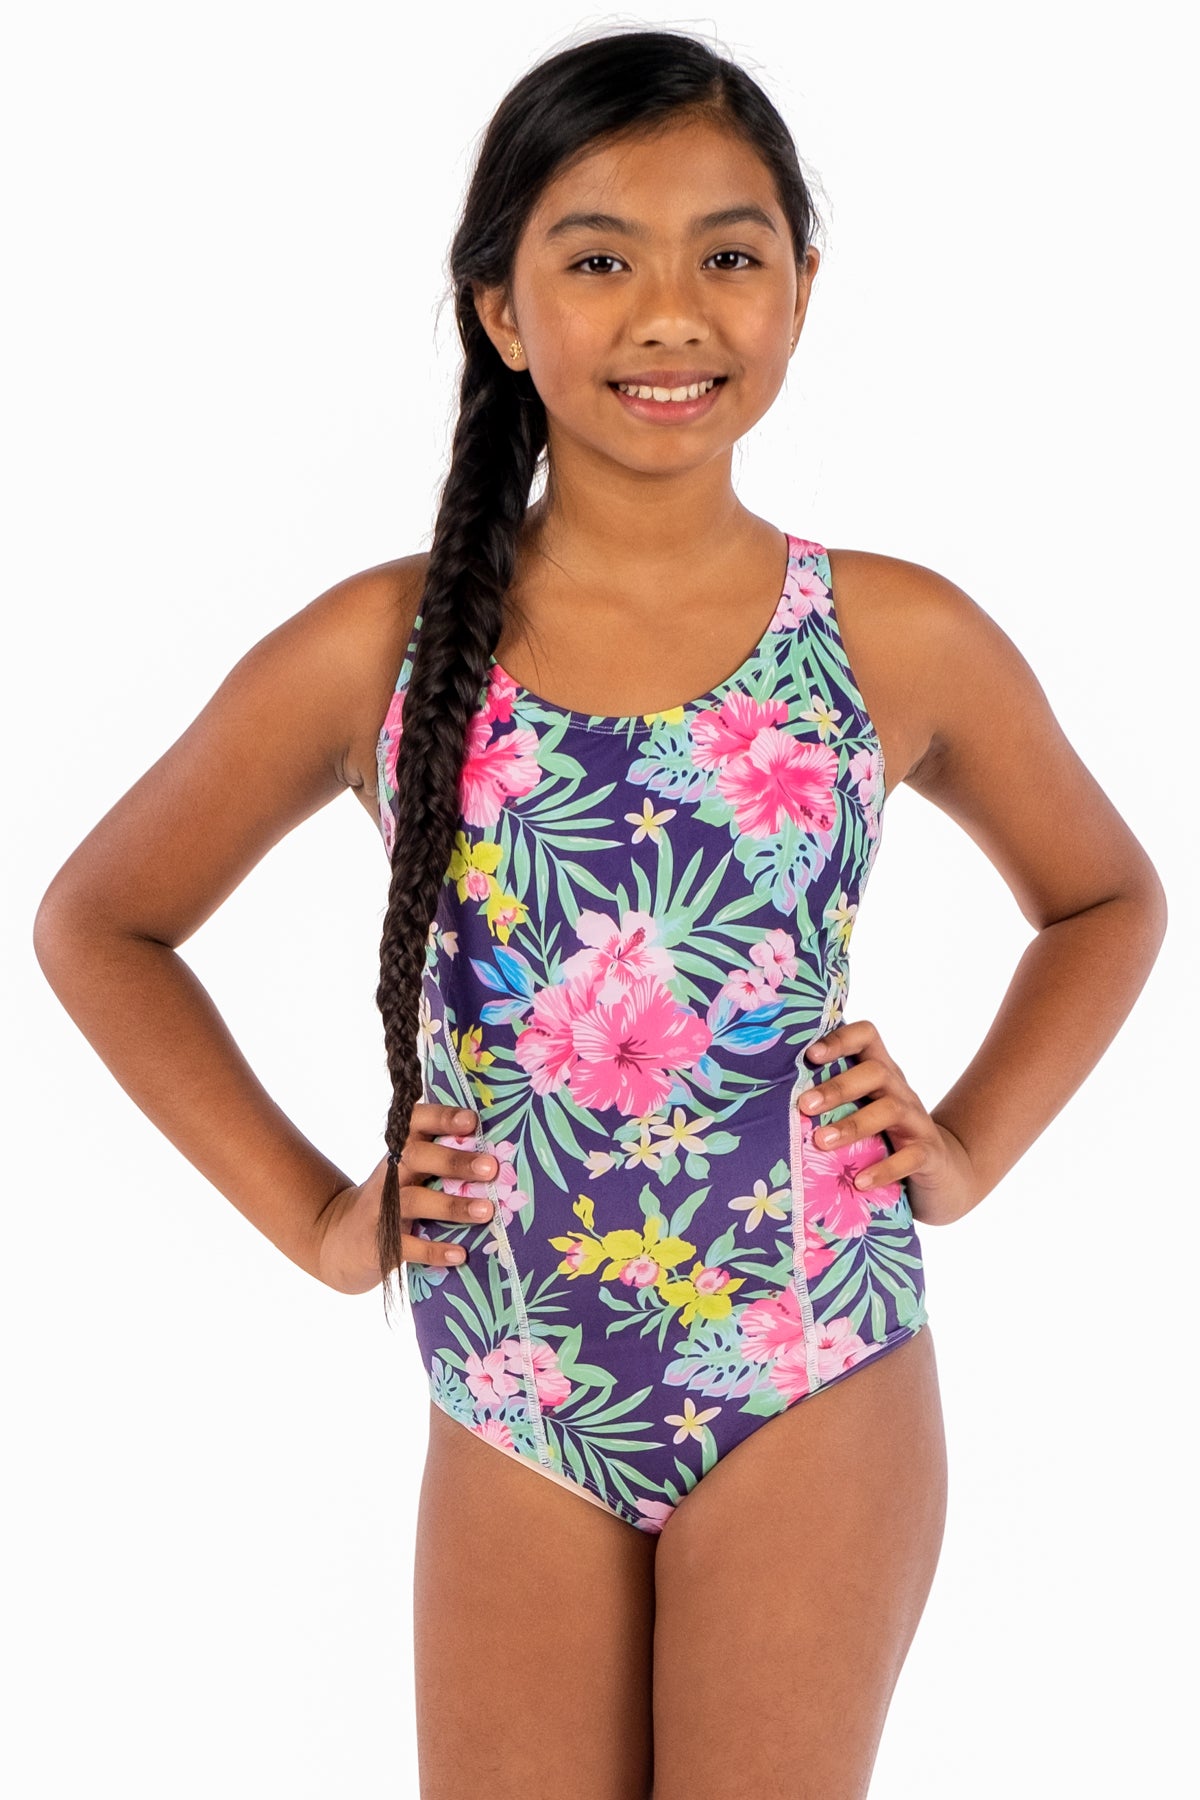 COEGA Girls Youth Competition Swim Suit – COEGA Sunwear Online Store